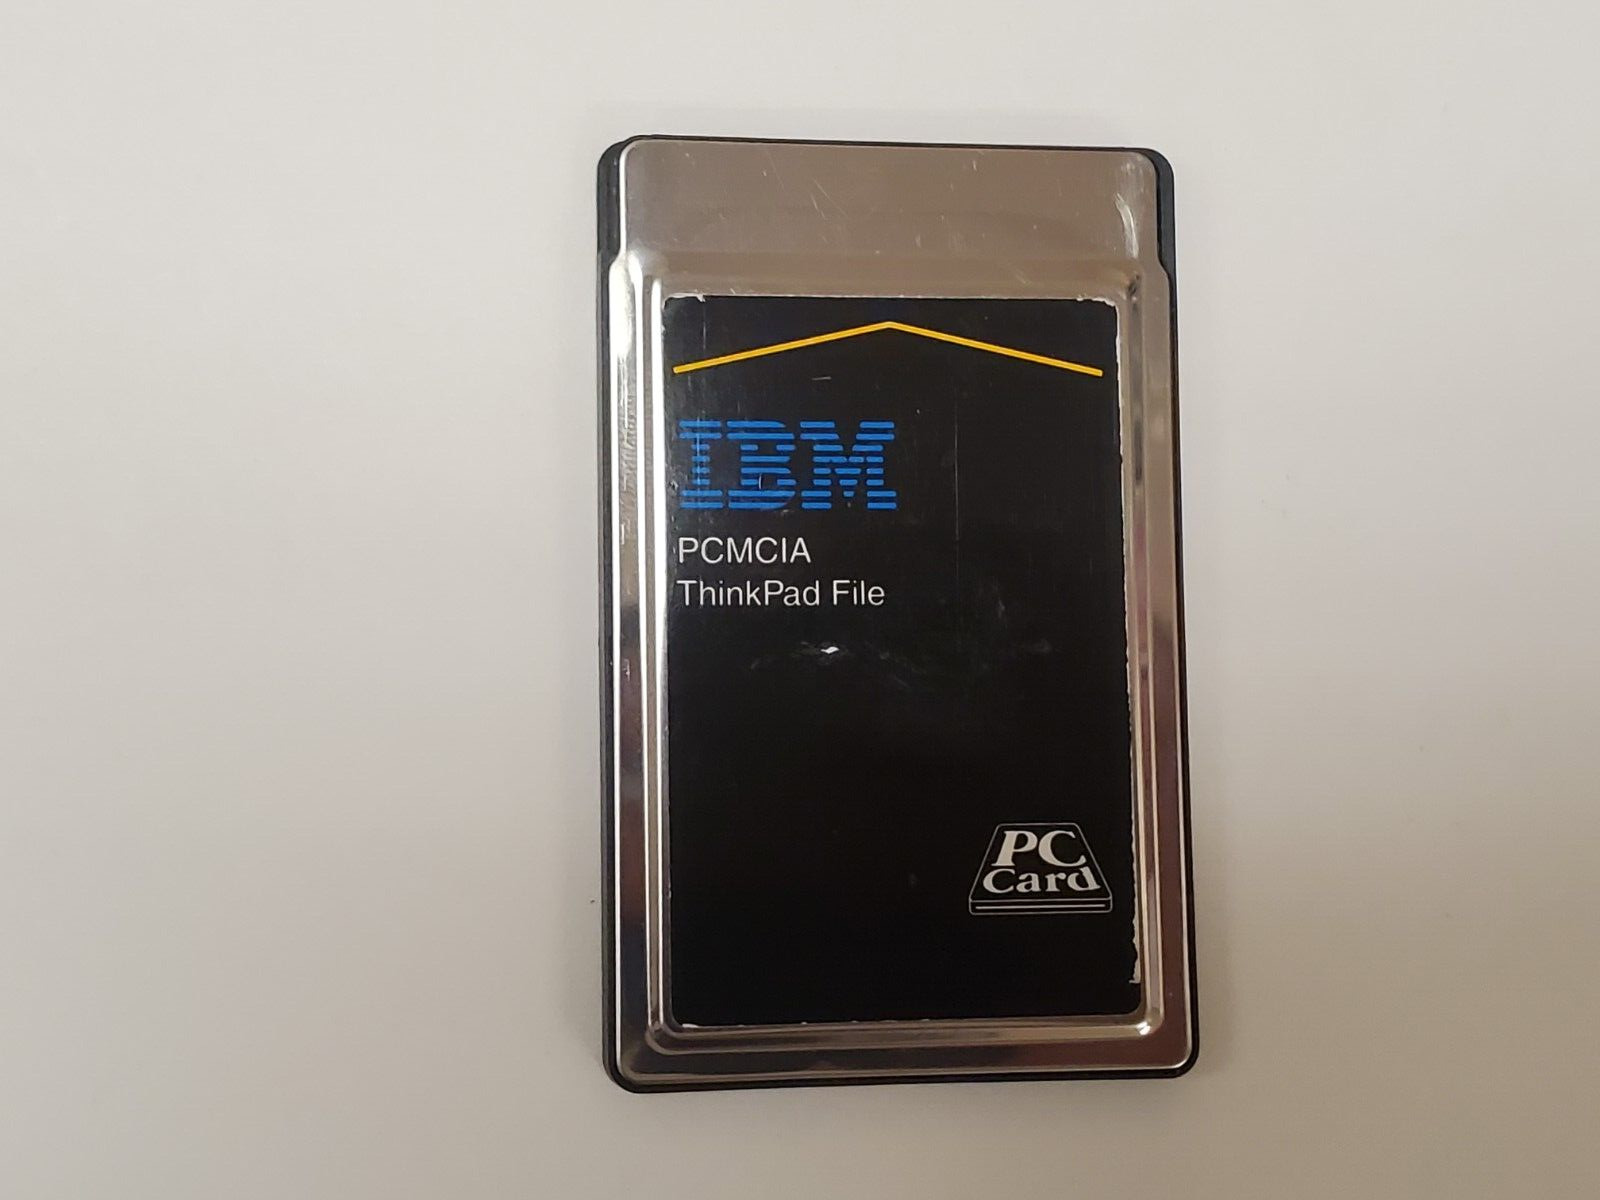 Vintage Rare IBM 10MB FLASHDISK Memory PC Card PCMCIA TPF-10MB Made in USA